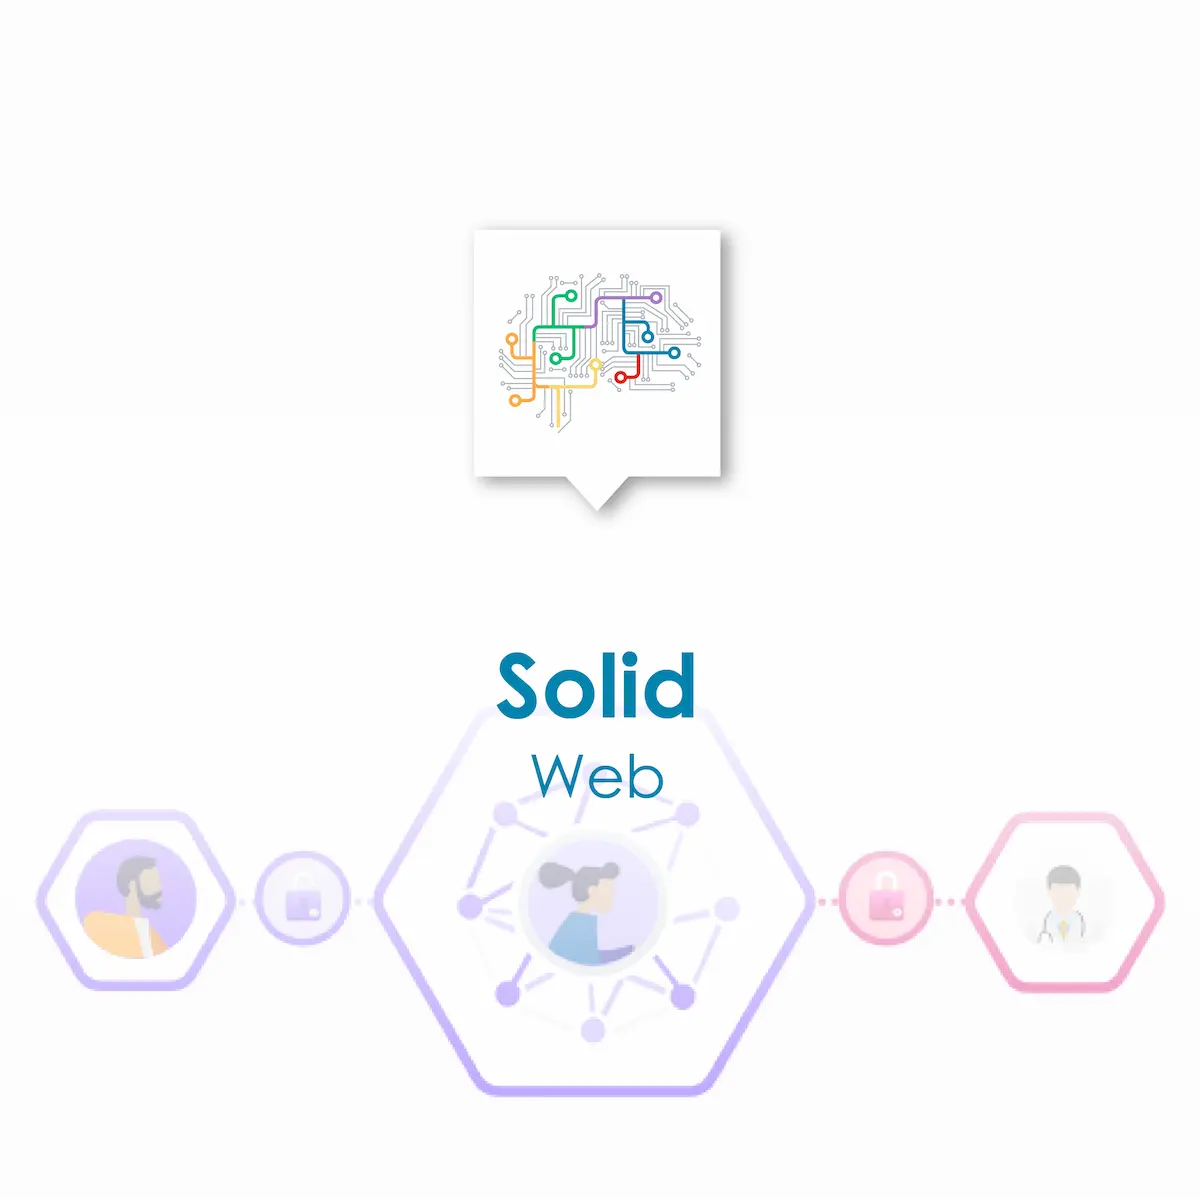 Solid Web